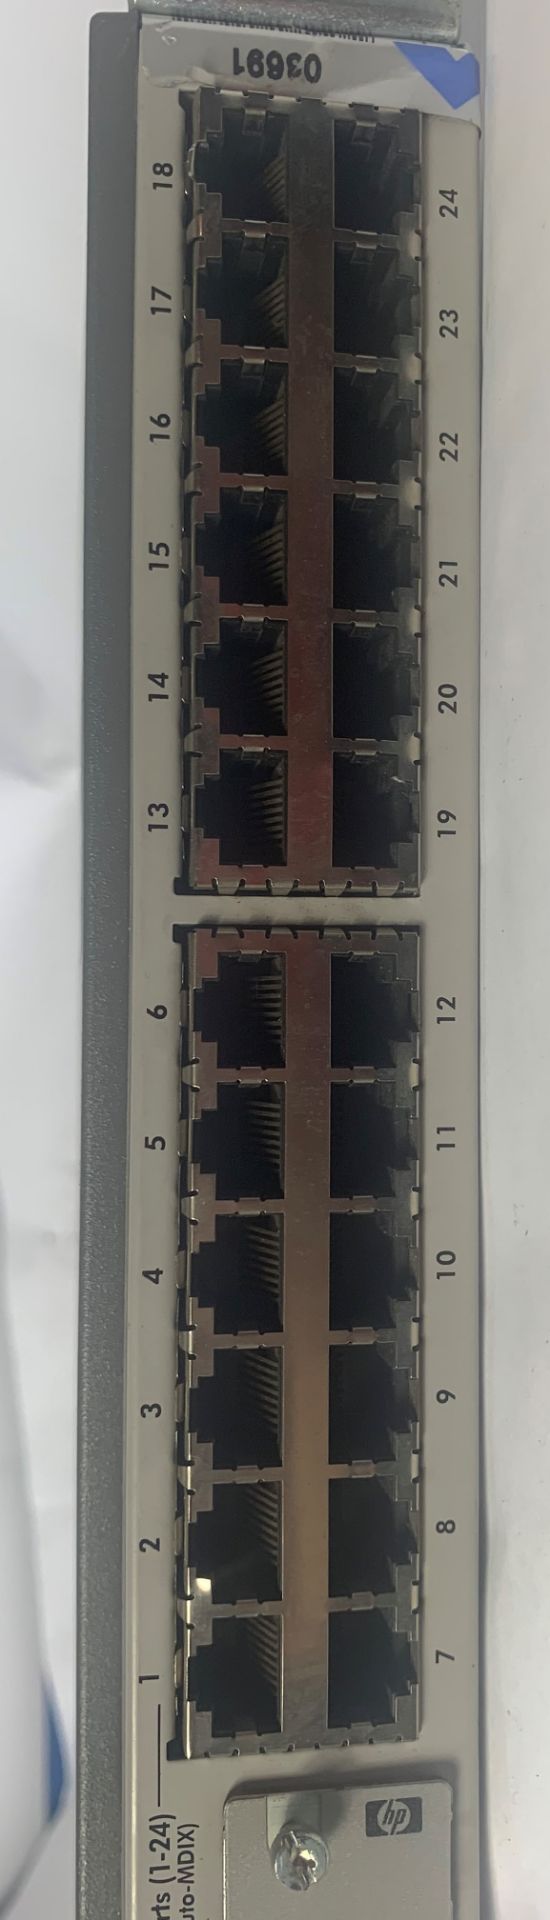 HP J4818A Pro 24 Port Switch - Image 4 of 5